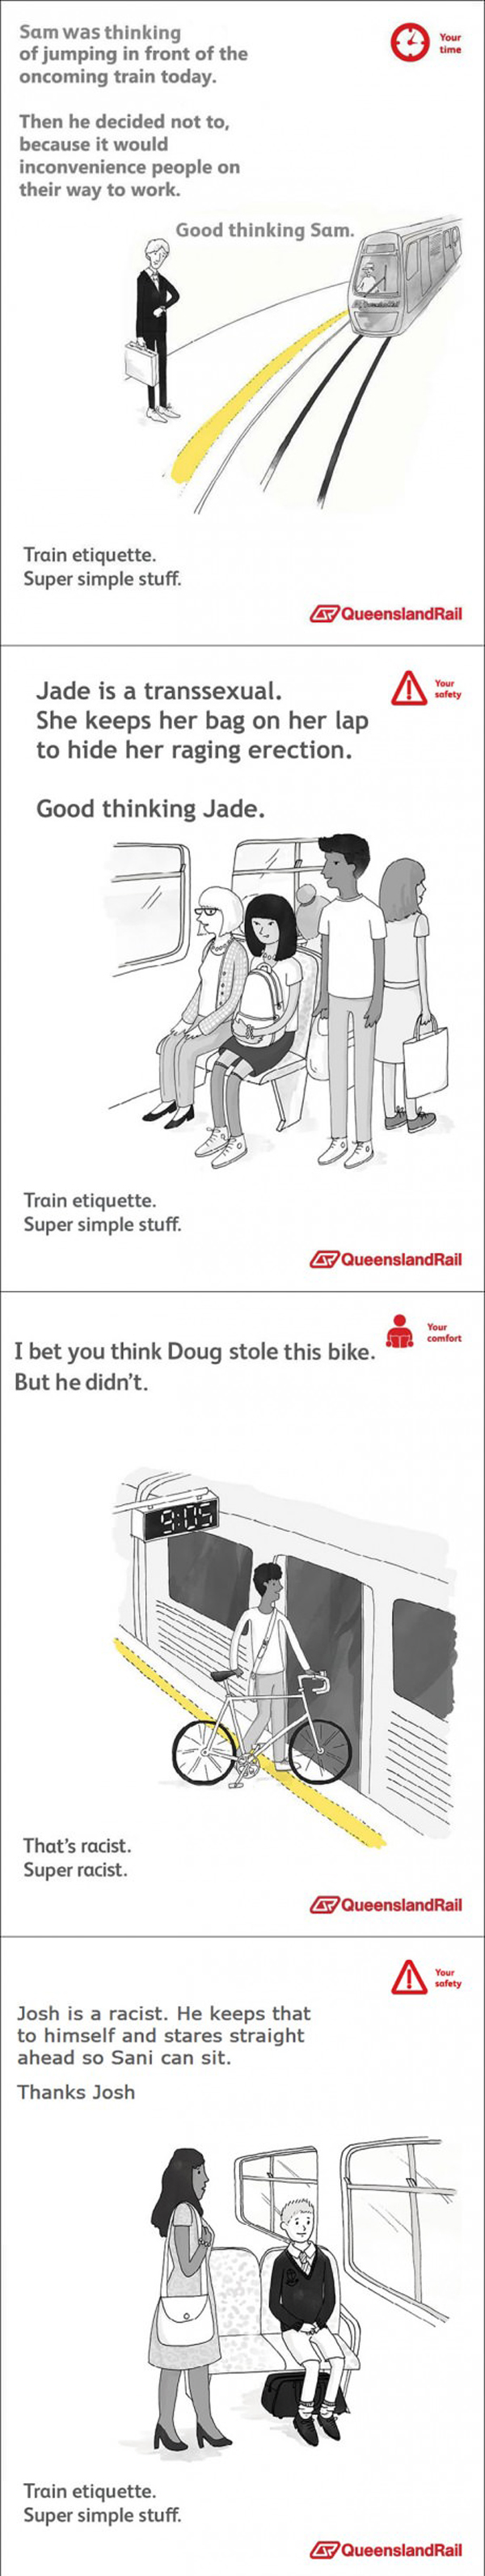 Queensland Rail Train Etiquette Parody